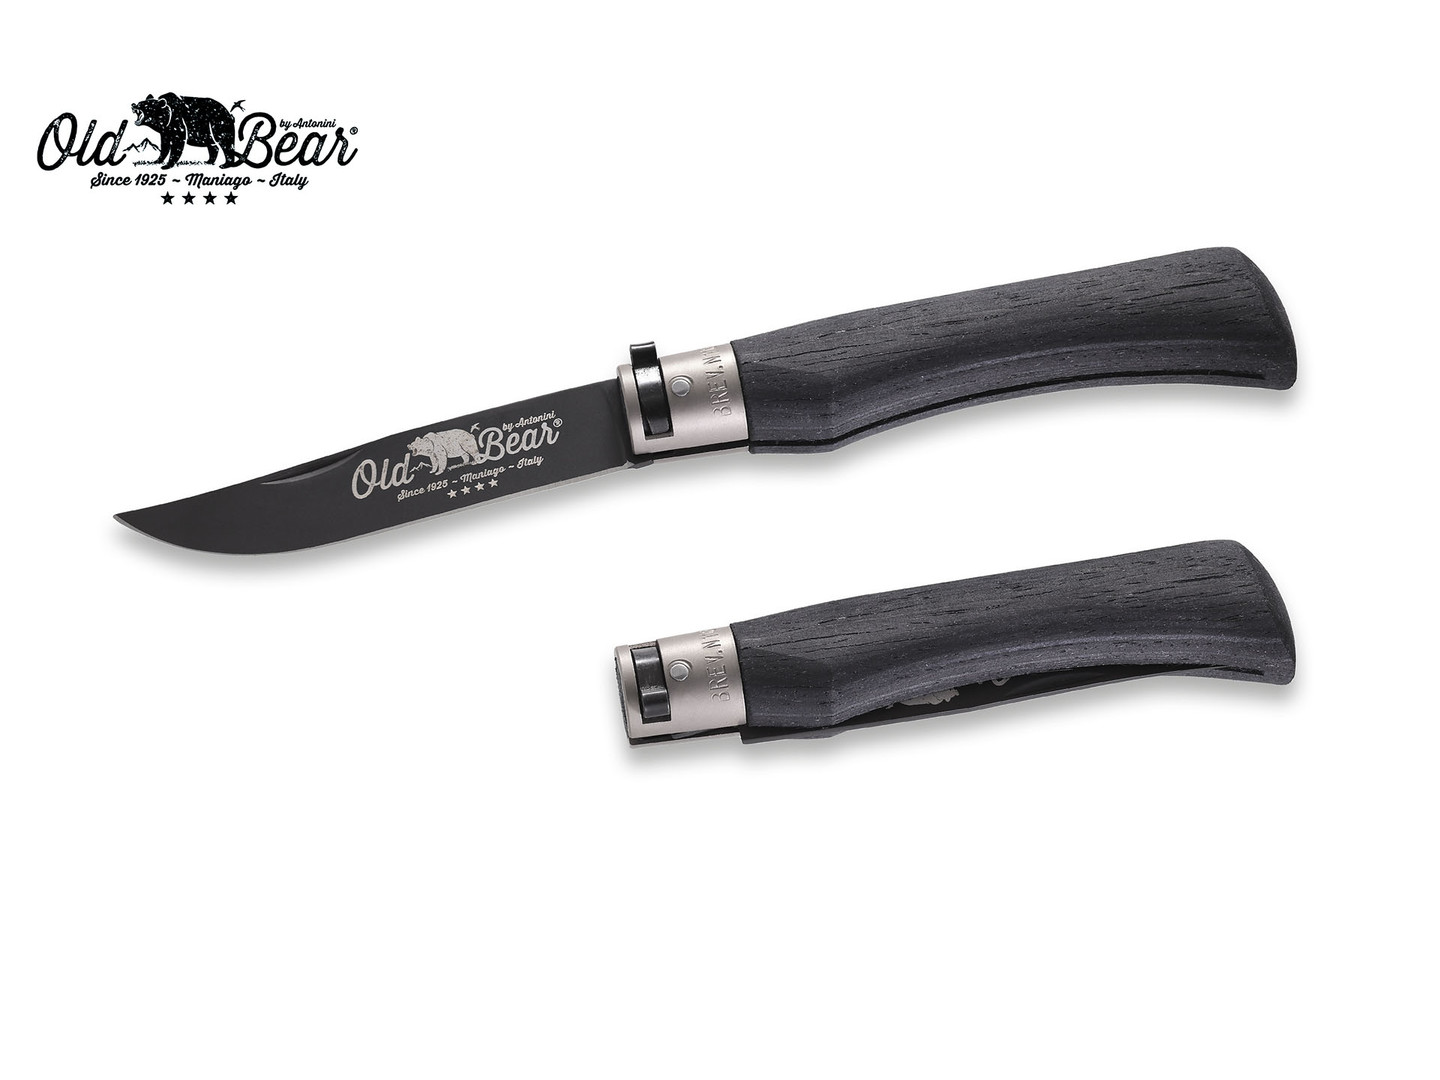 Нож Antonini Old Bear Laminate NSR L 9303/21_MNK нержавеющая сталь AISI 420 рукоять ламинат, никель